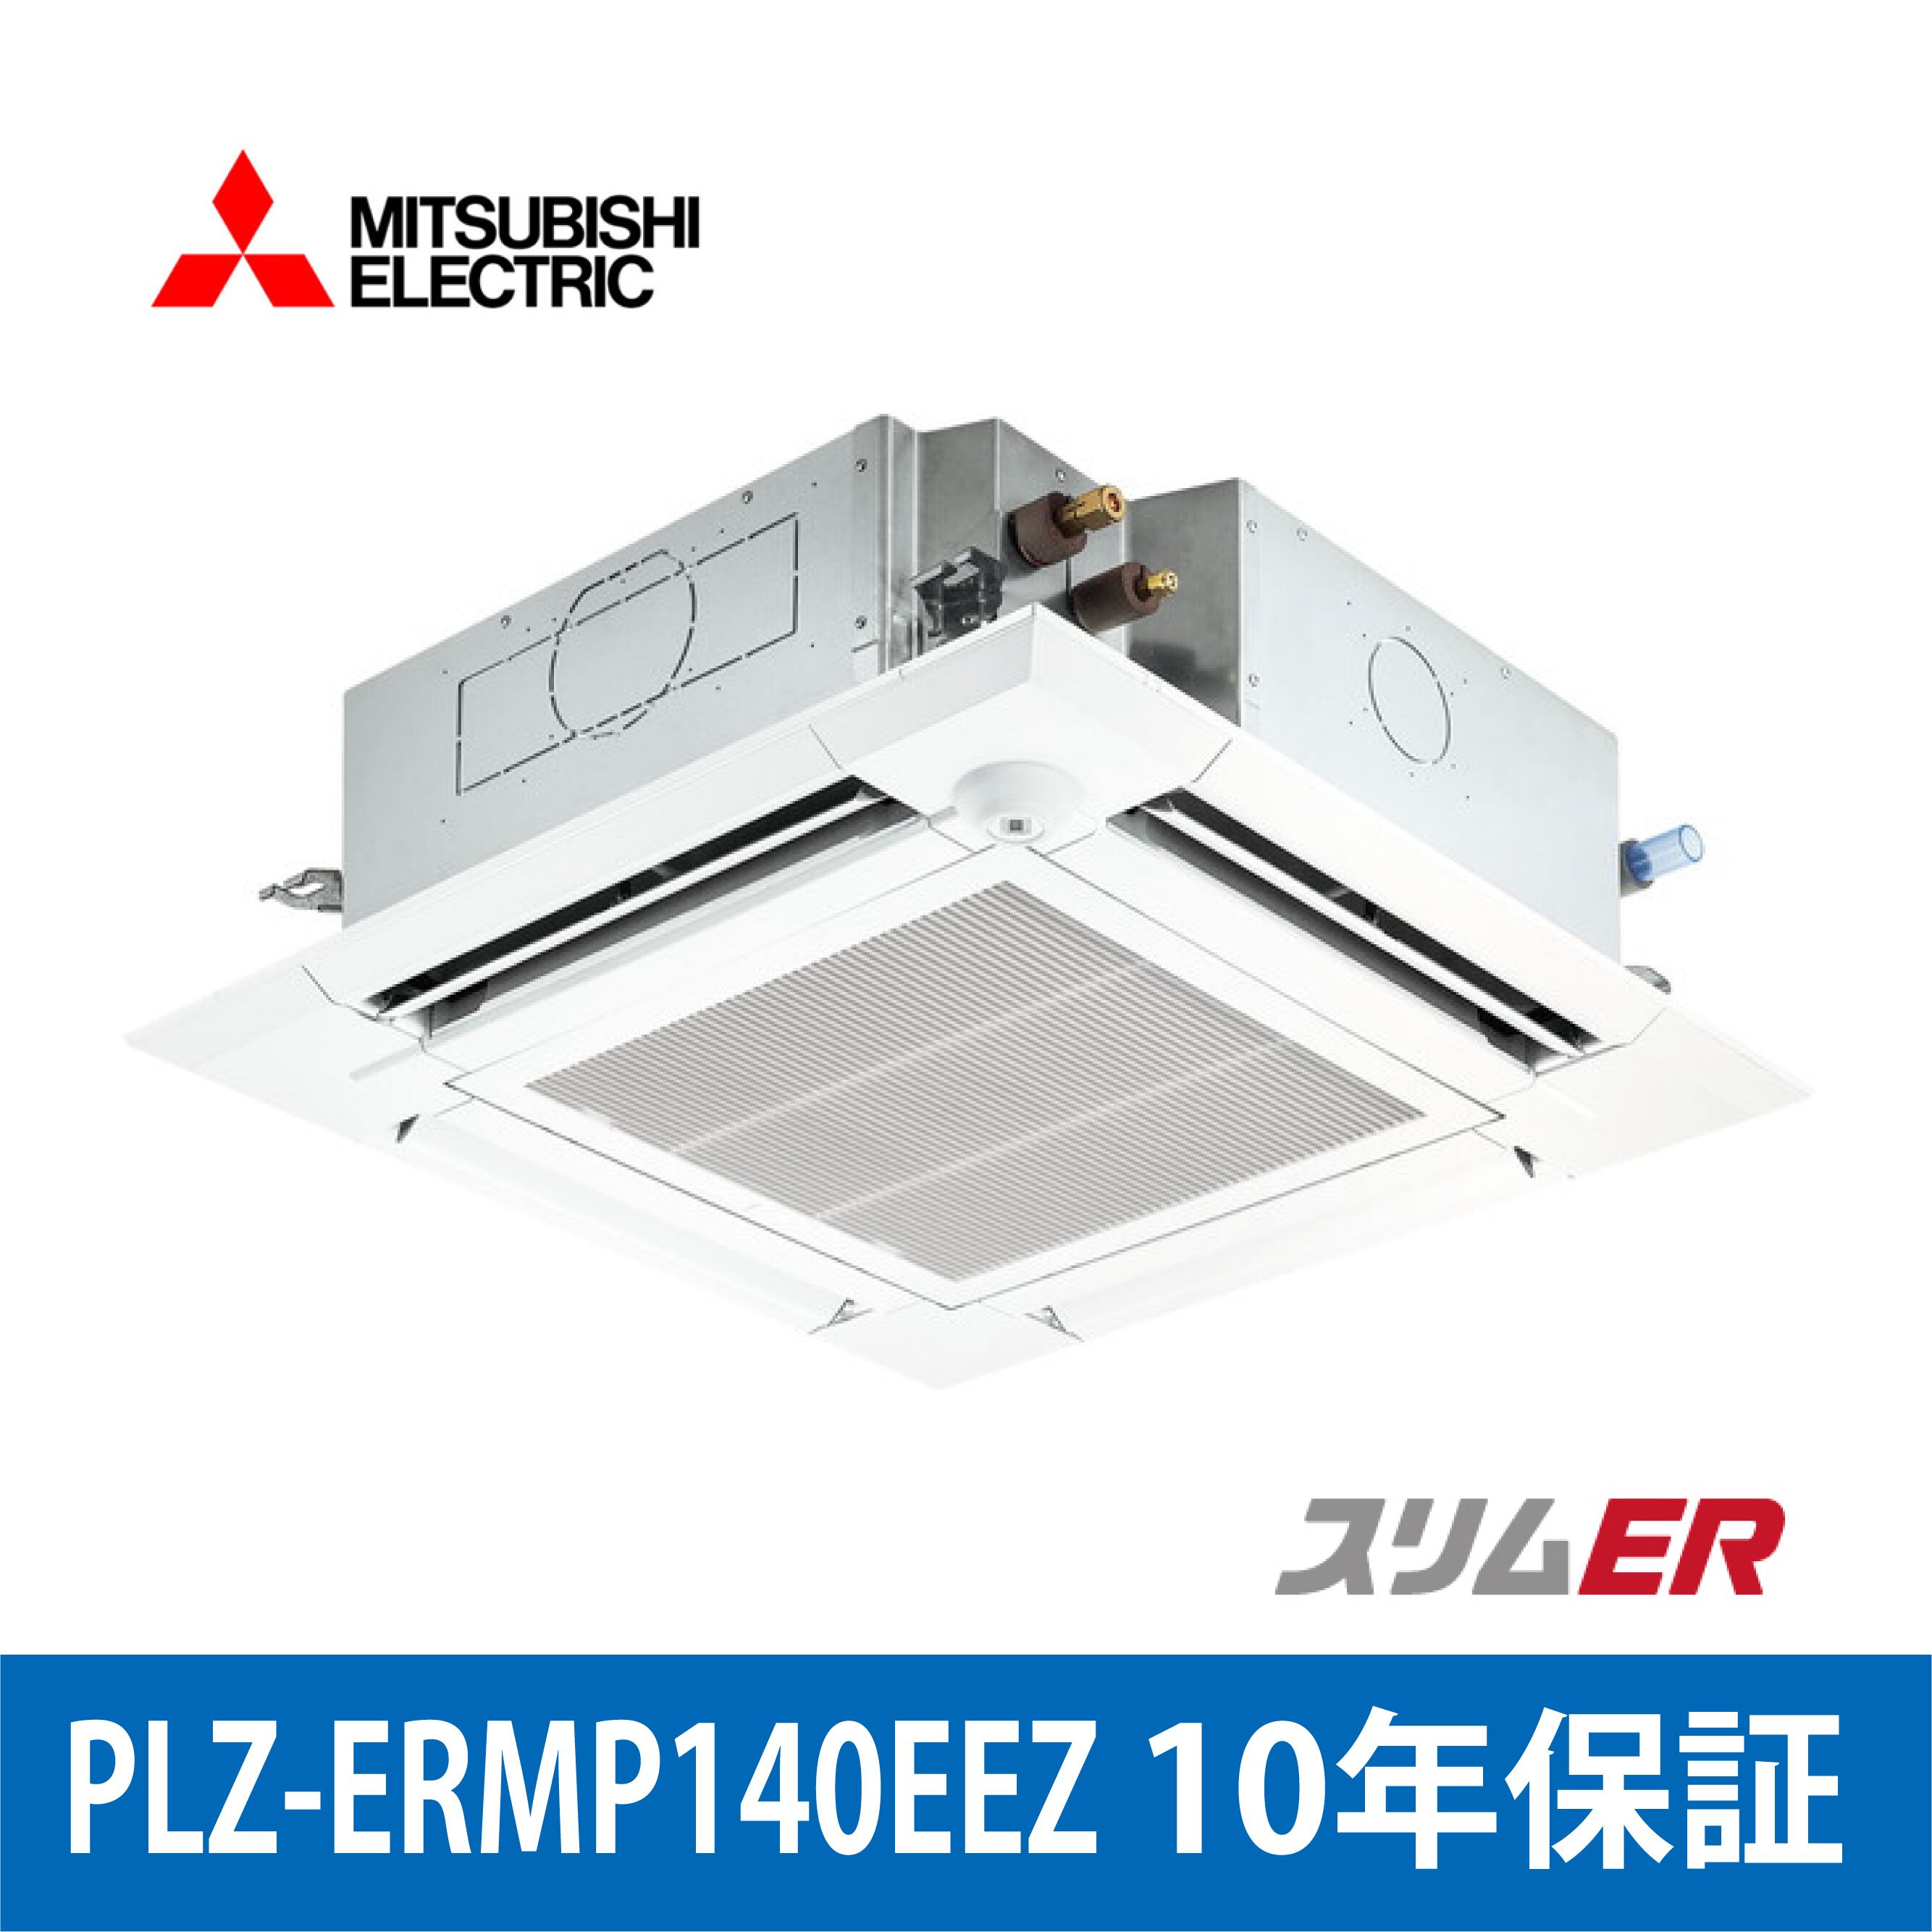 PLZ-ERMP140EEZ【MITSUBISHI】4方向天井カセット型 スリムER